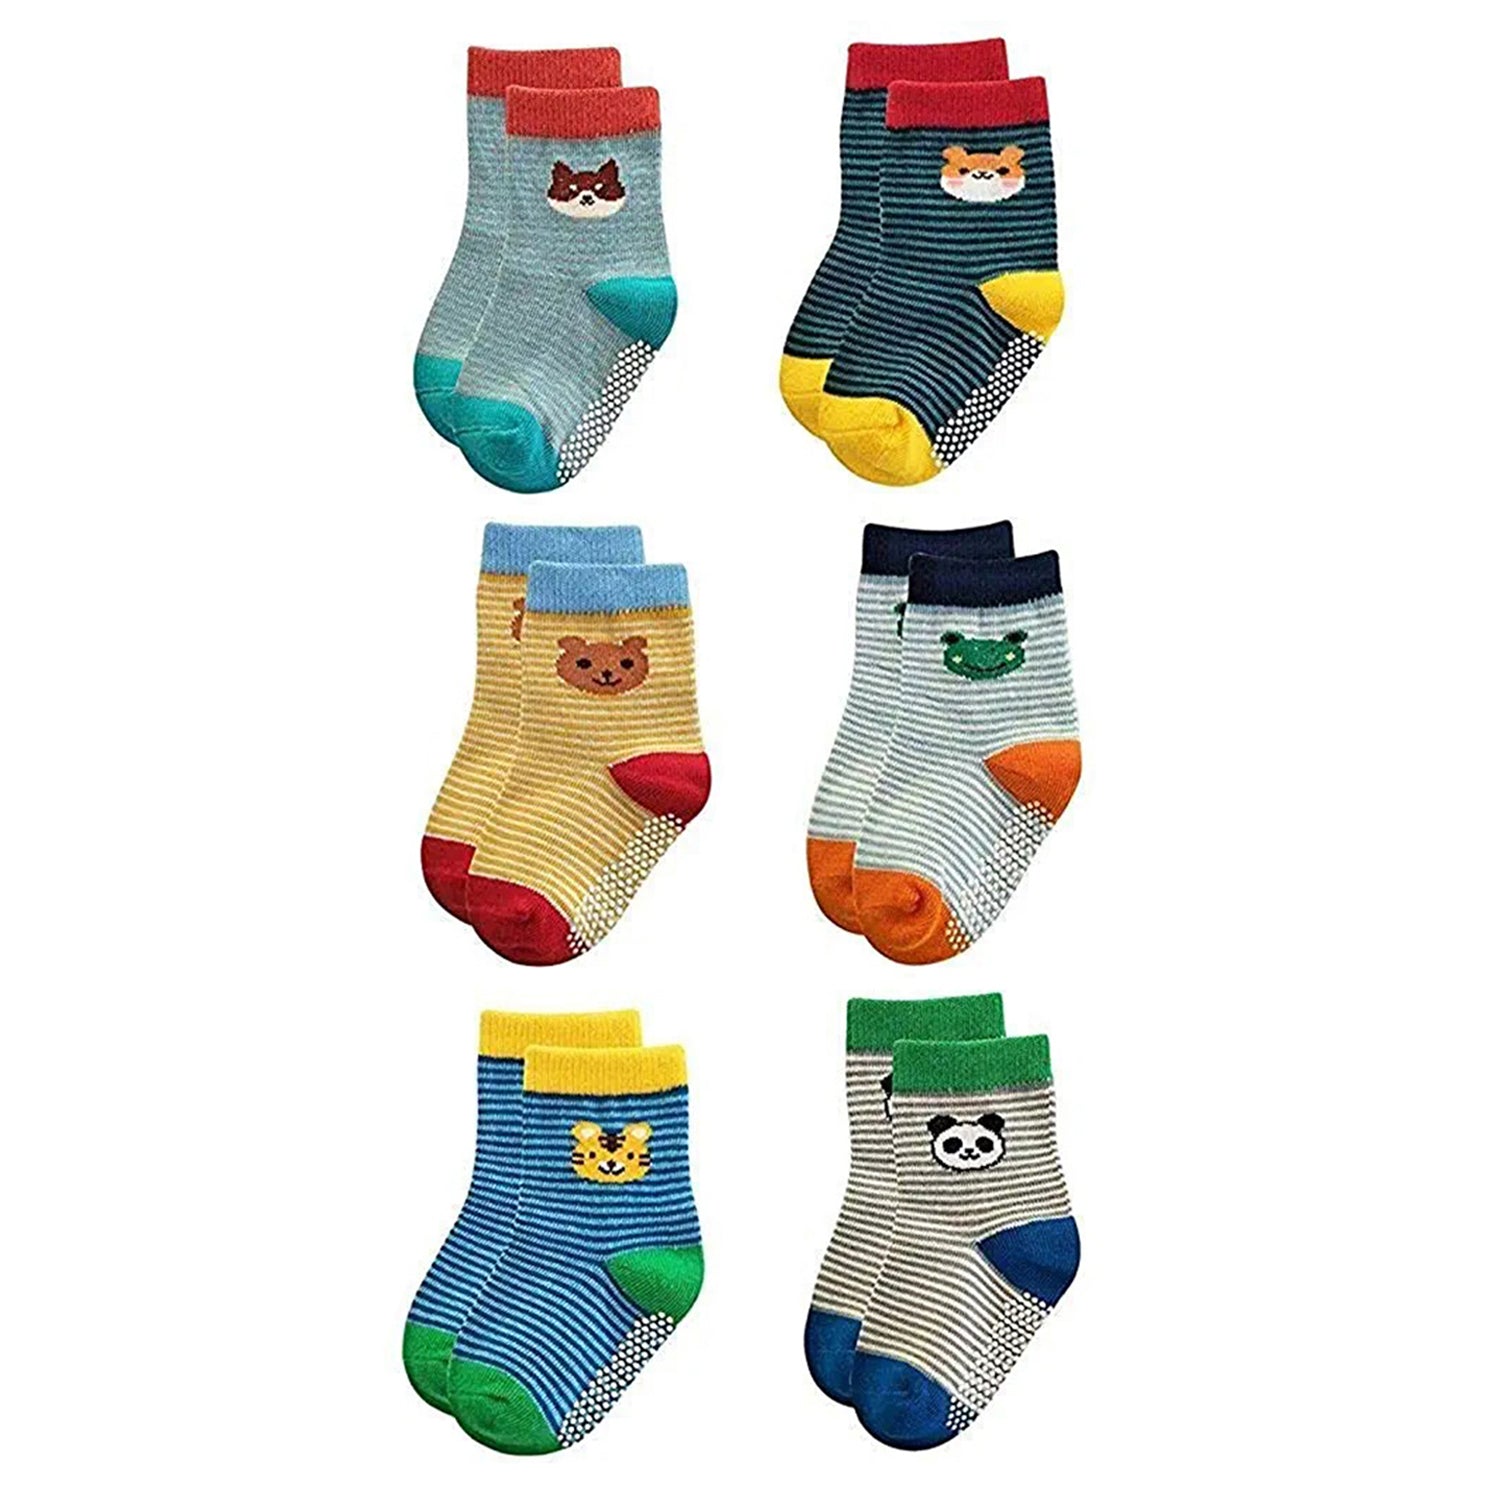 FOOTPRINTS Baby's Organic Cotton Anti-Skid Socks (Multicolour, Mix